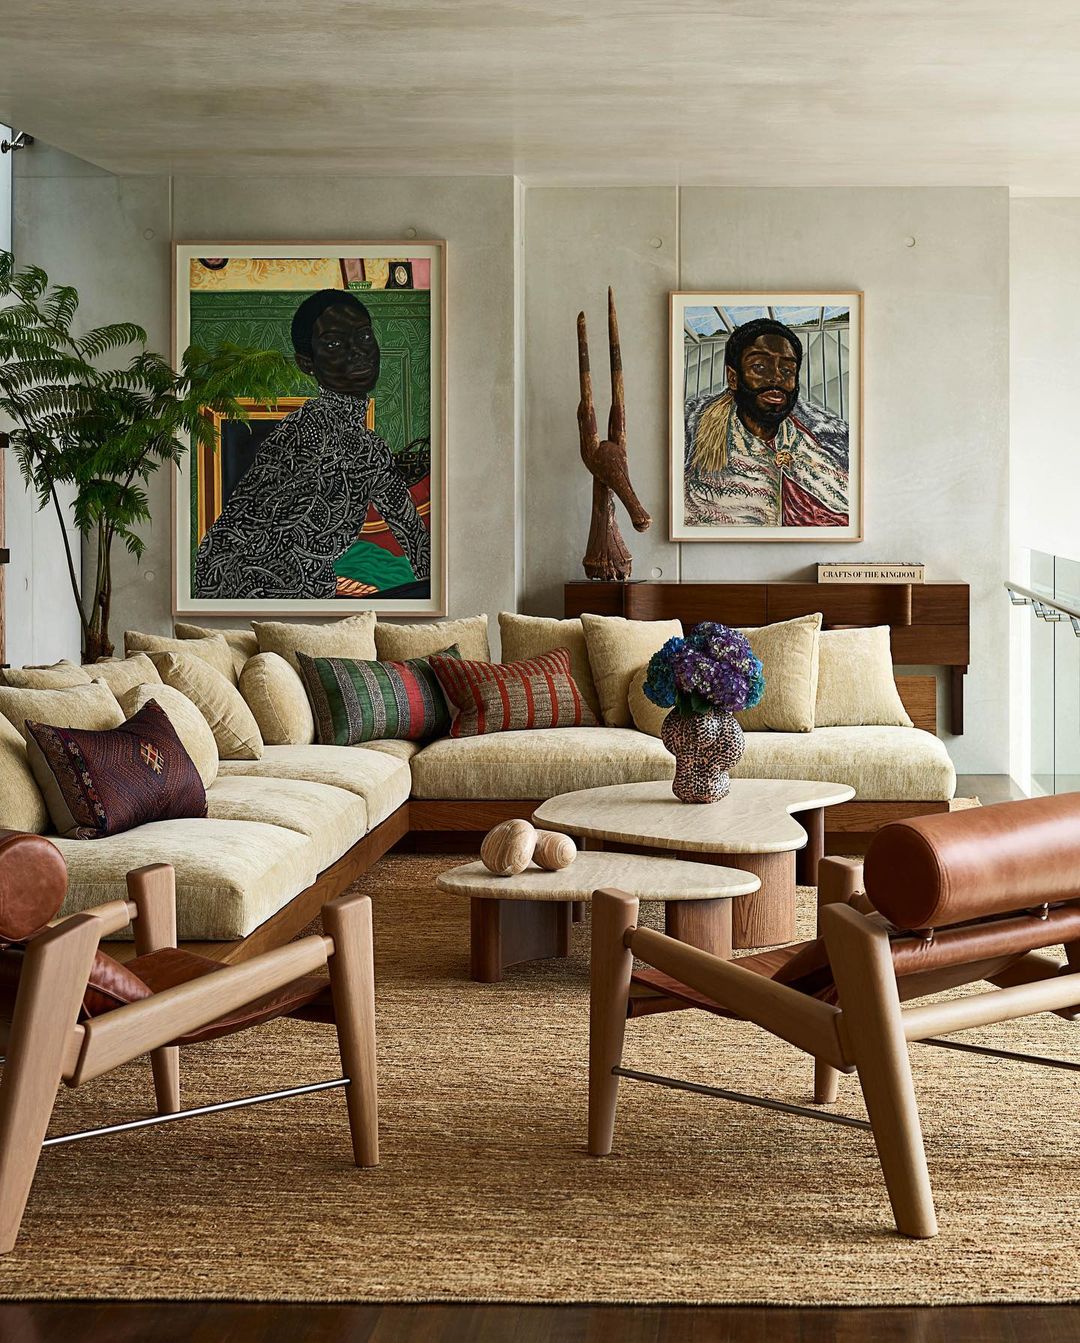 Alicia Keys and Kasseem Dean's living room